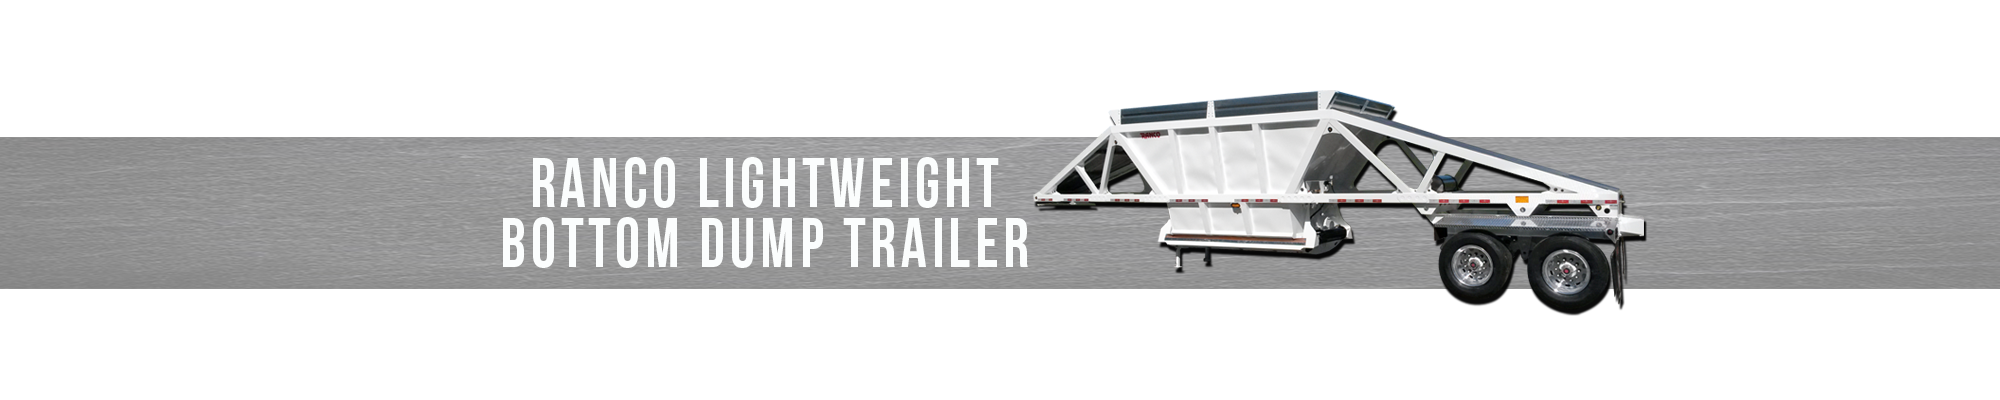 RANCO Lightweight Bottom Dump Trailer